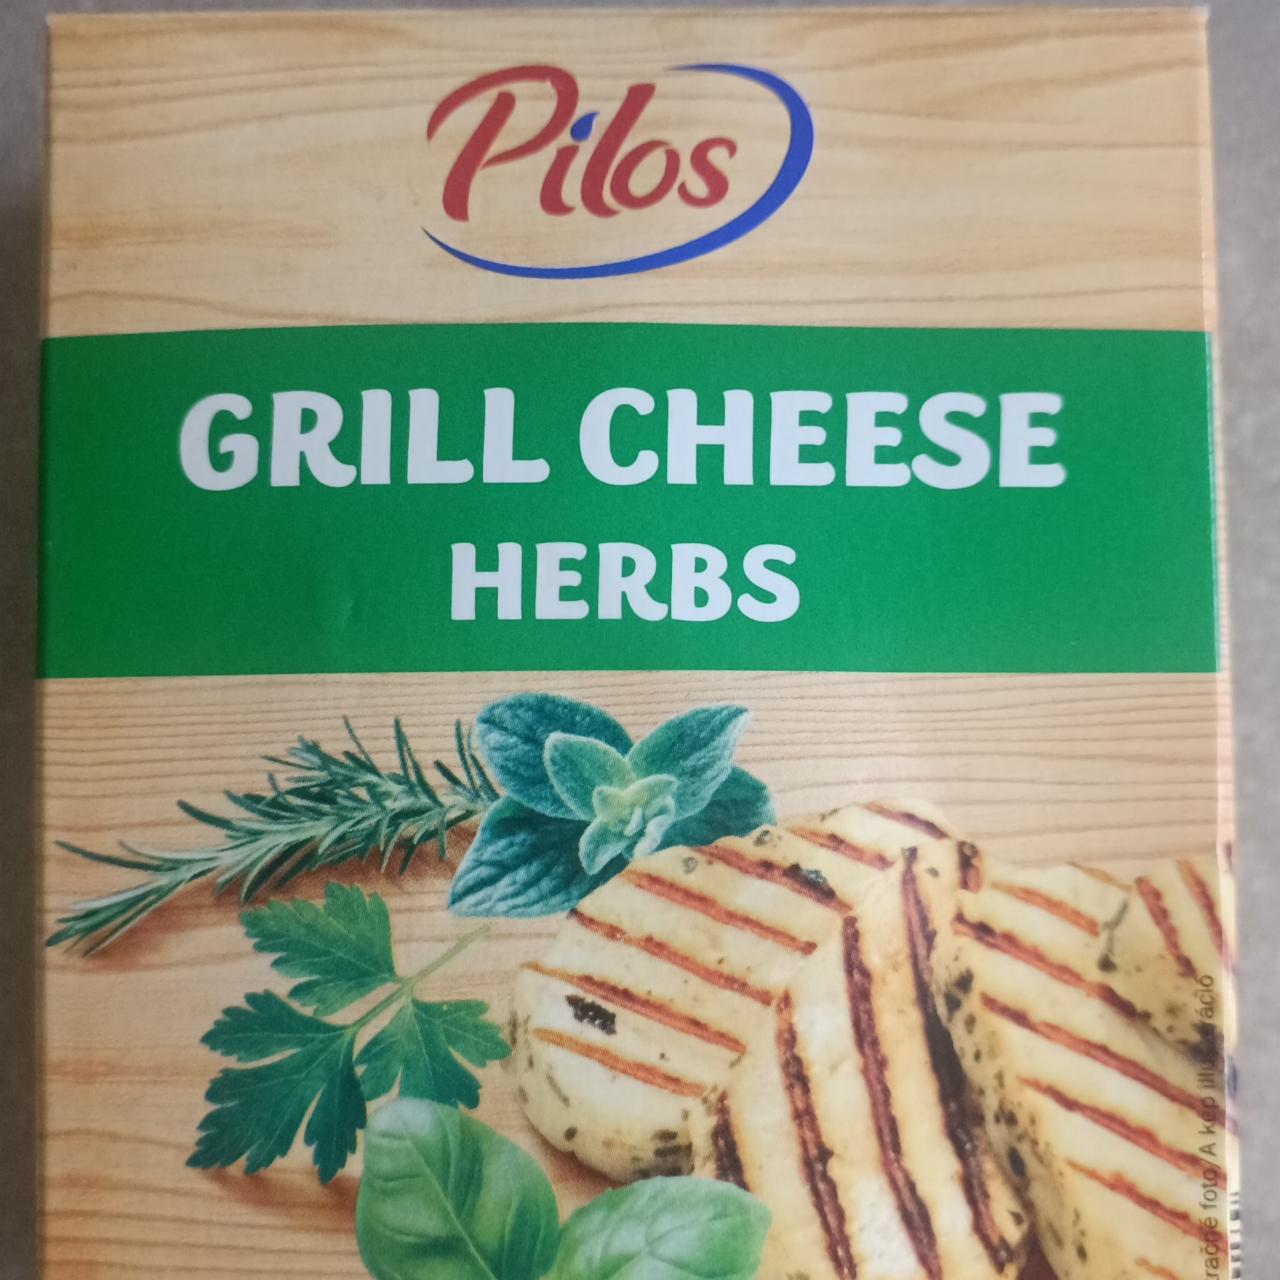 Fotografie - Grill Cheese Herbs Pilos